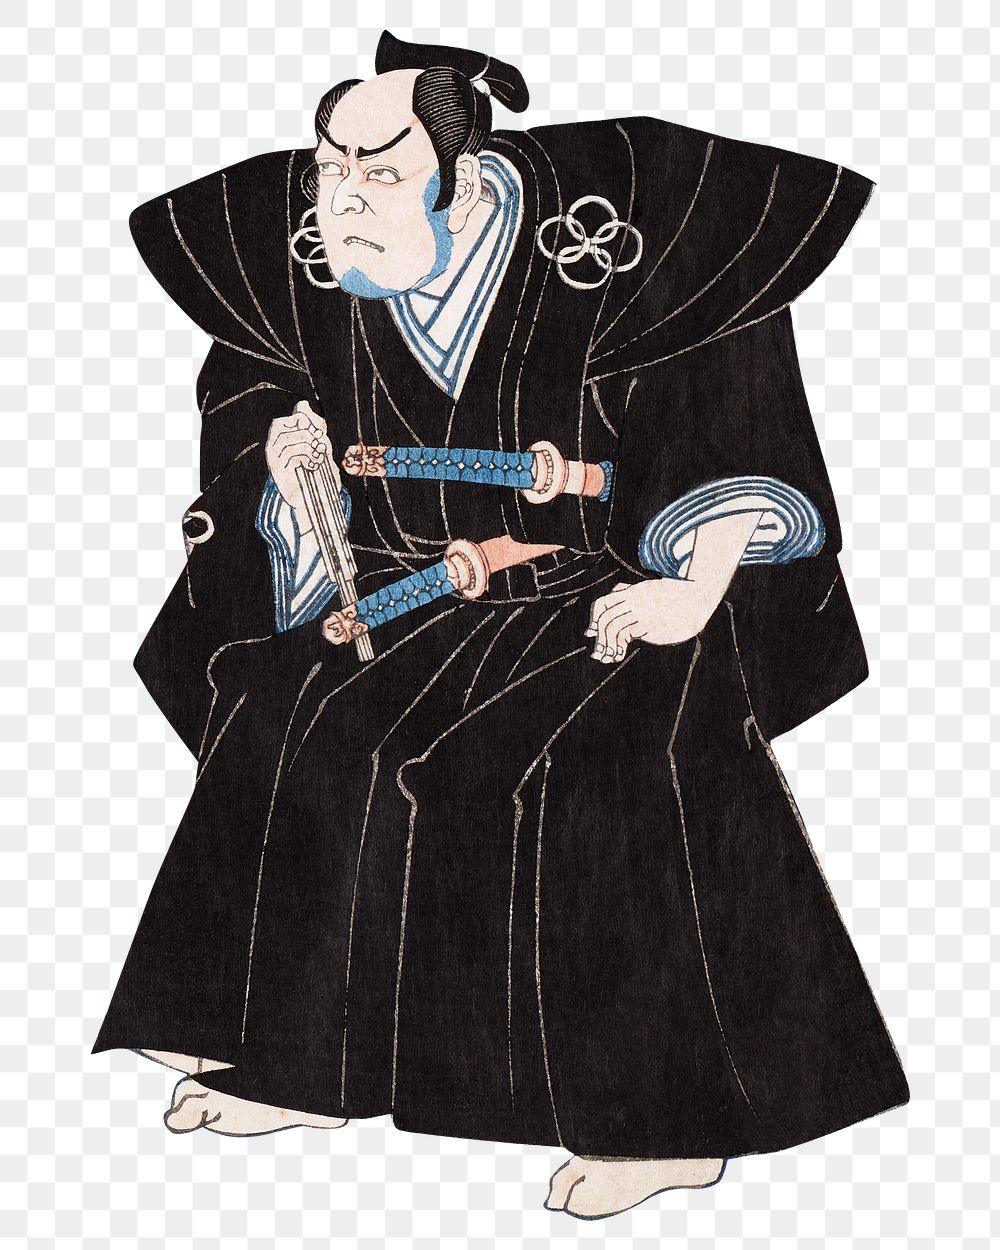 Png Kanedehon Chushingura; Act 4: Seppuku of Lord En'ya, transparent background, Japanese ukiyo-e woodblock print by Utagawa…